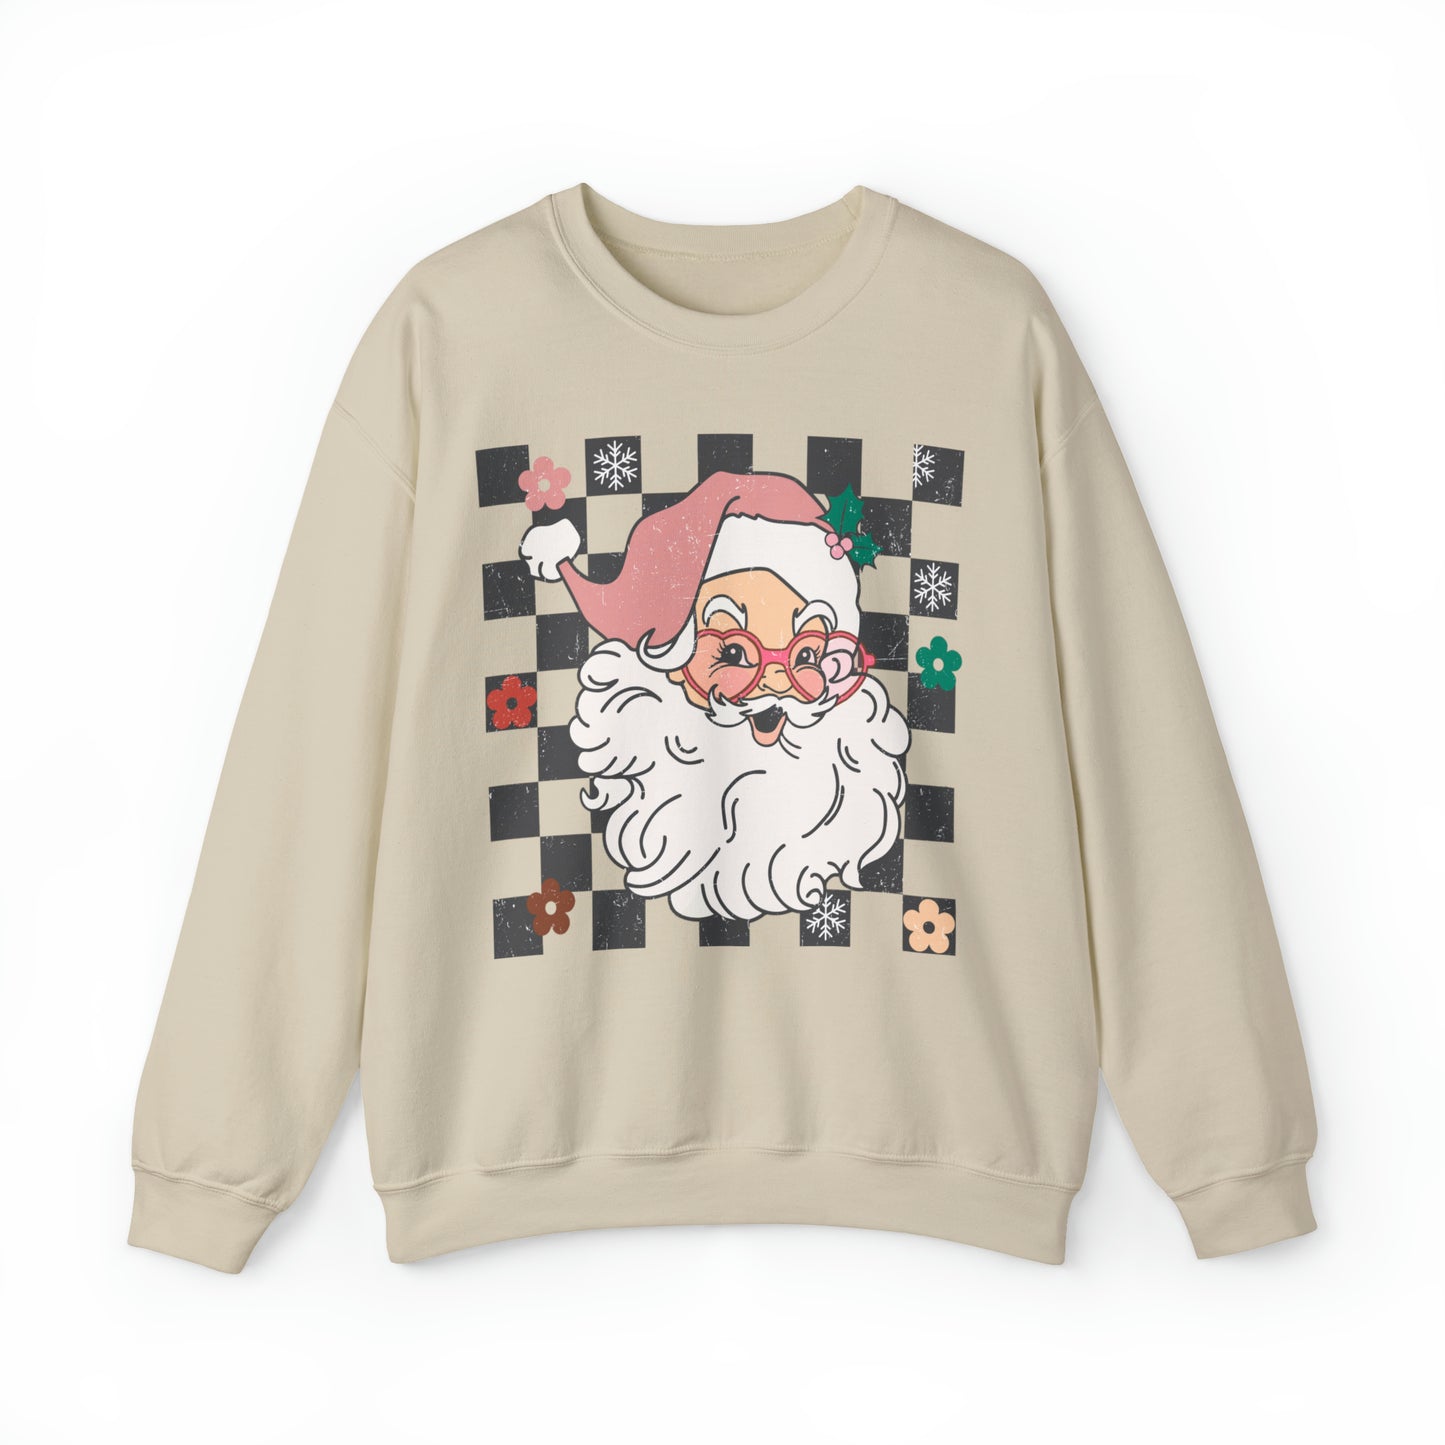 Checkered Santa Sweatshirt - More Colors